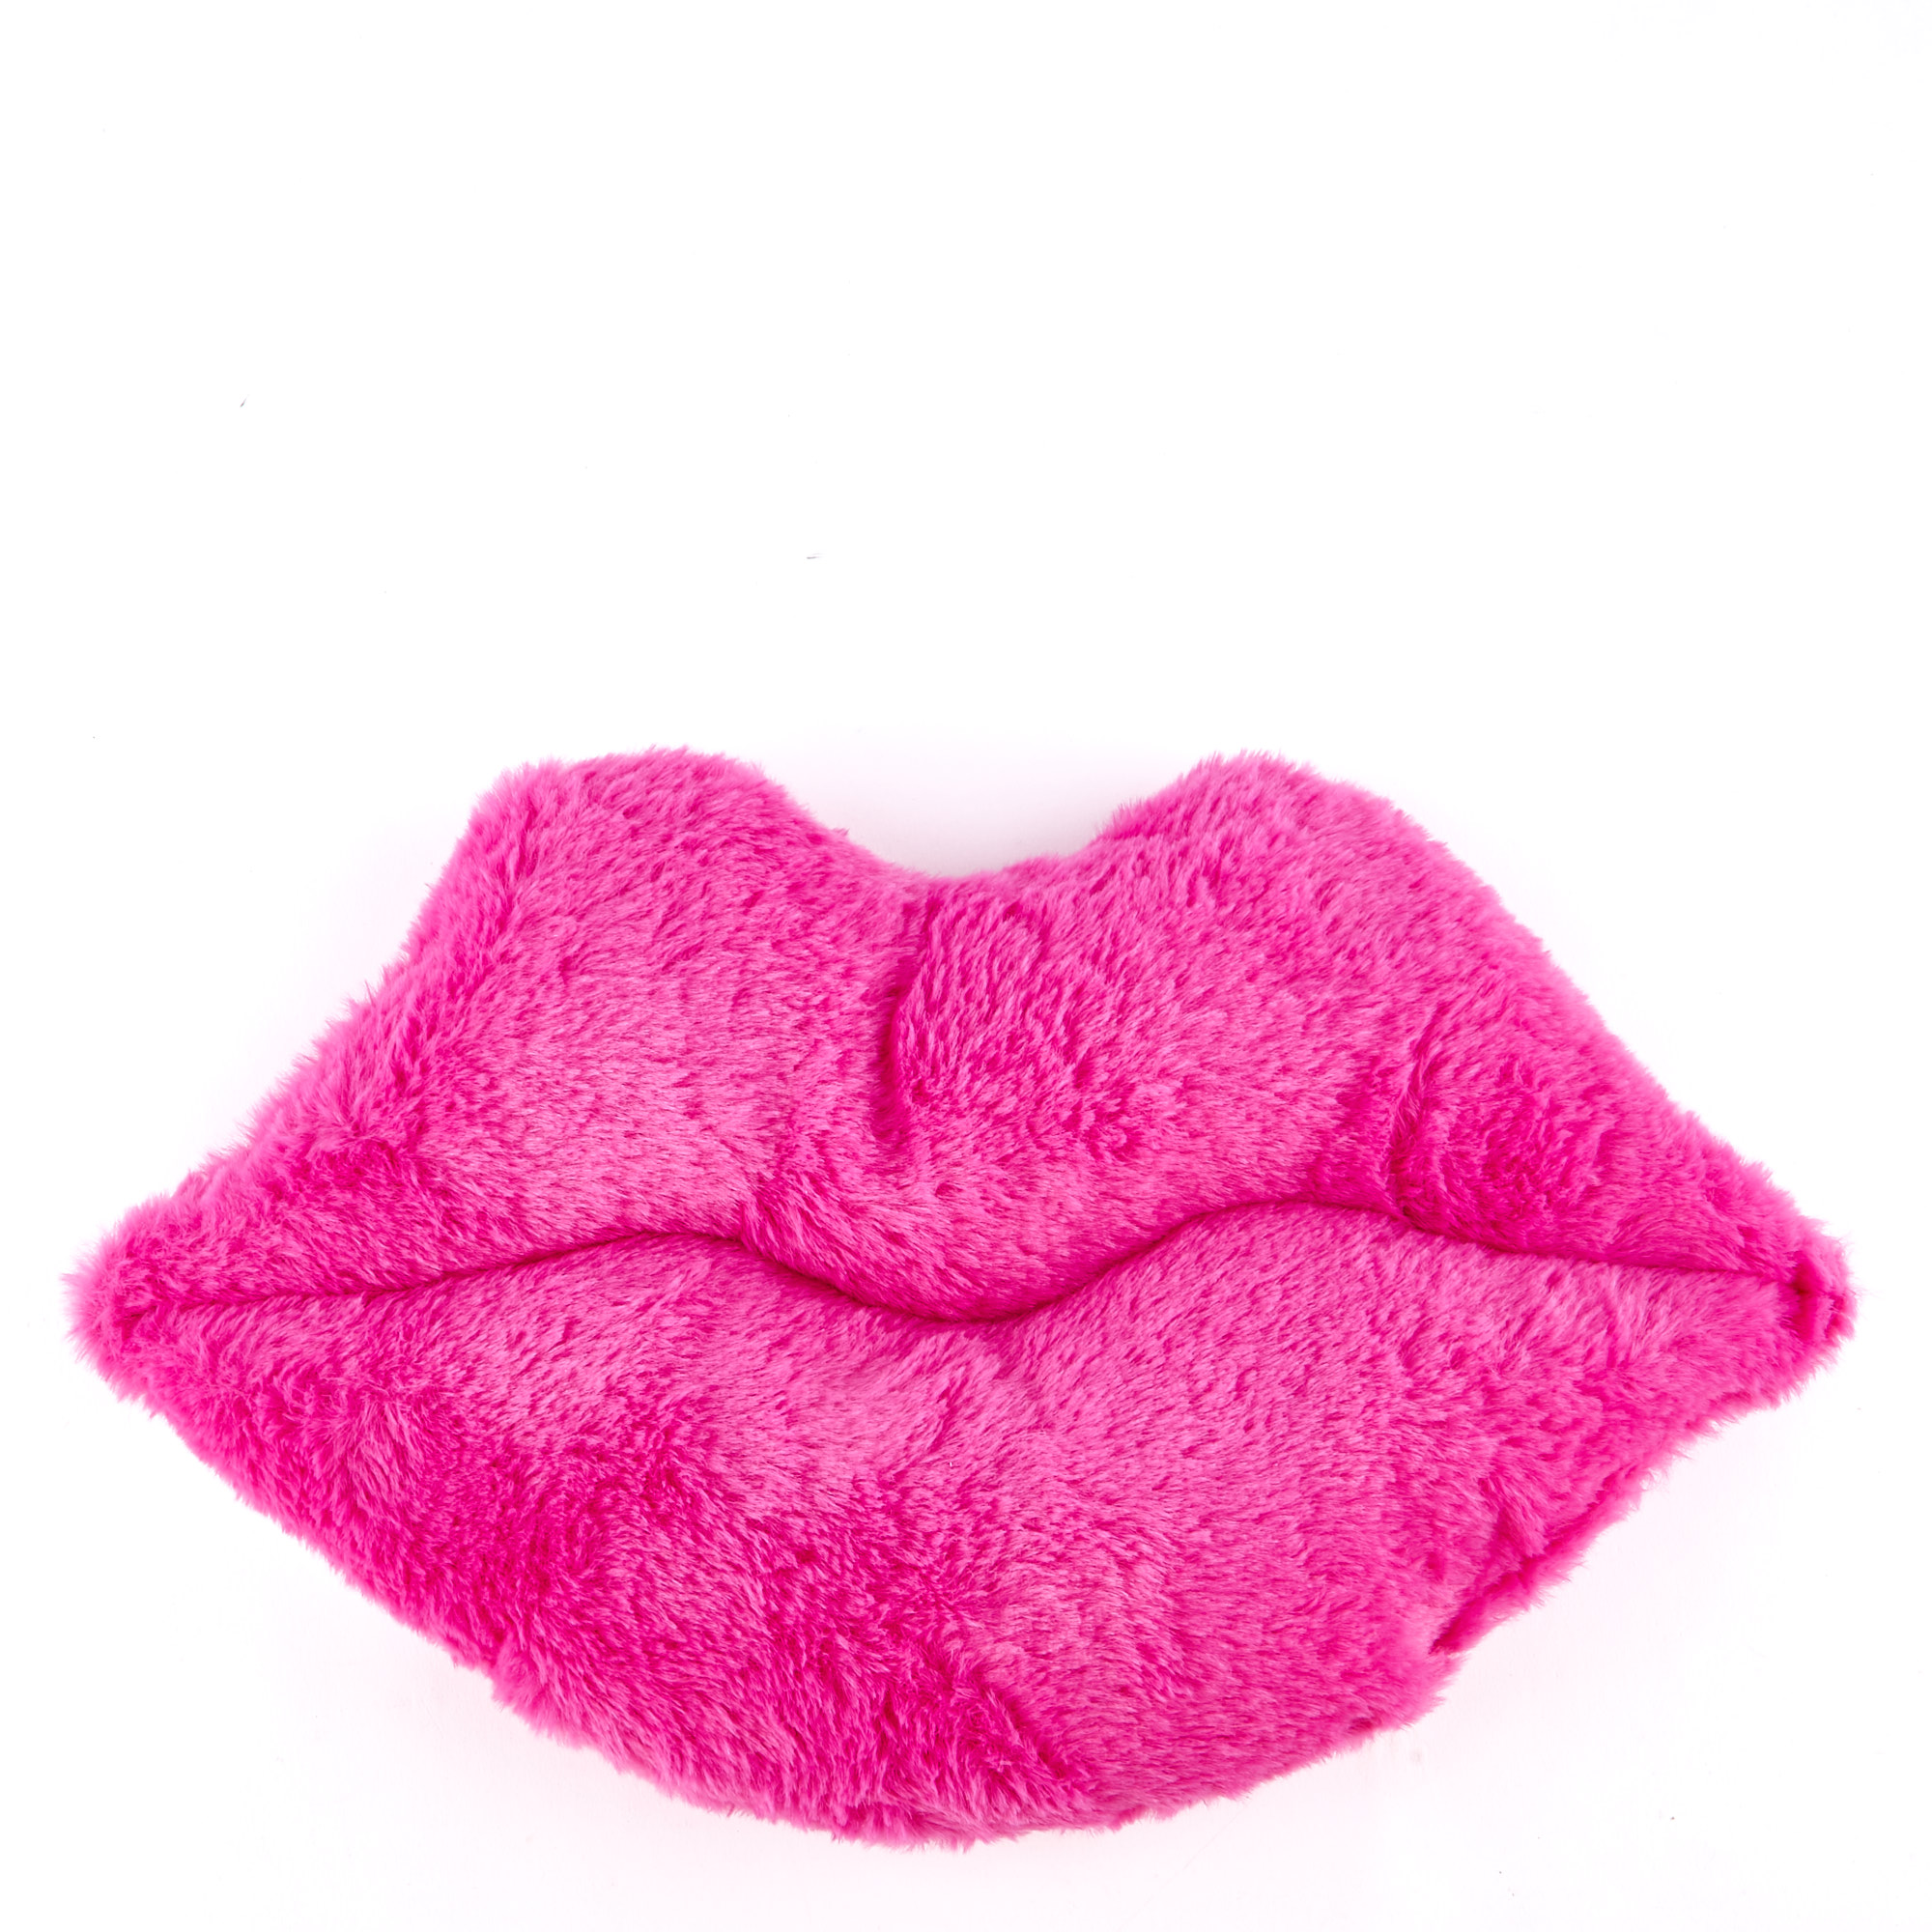 Pink Lips Cushion